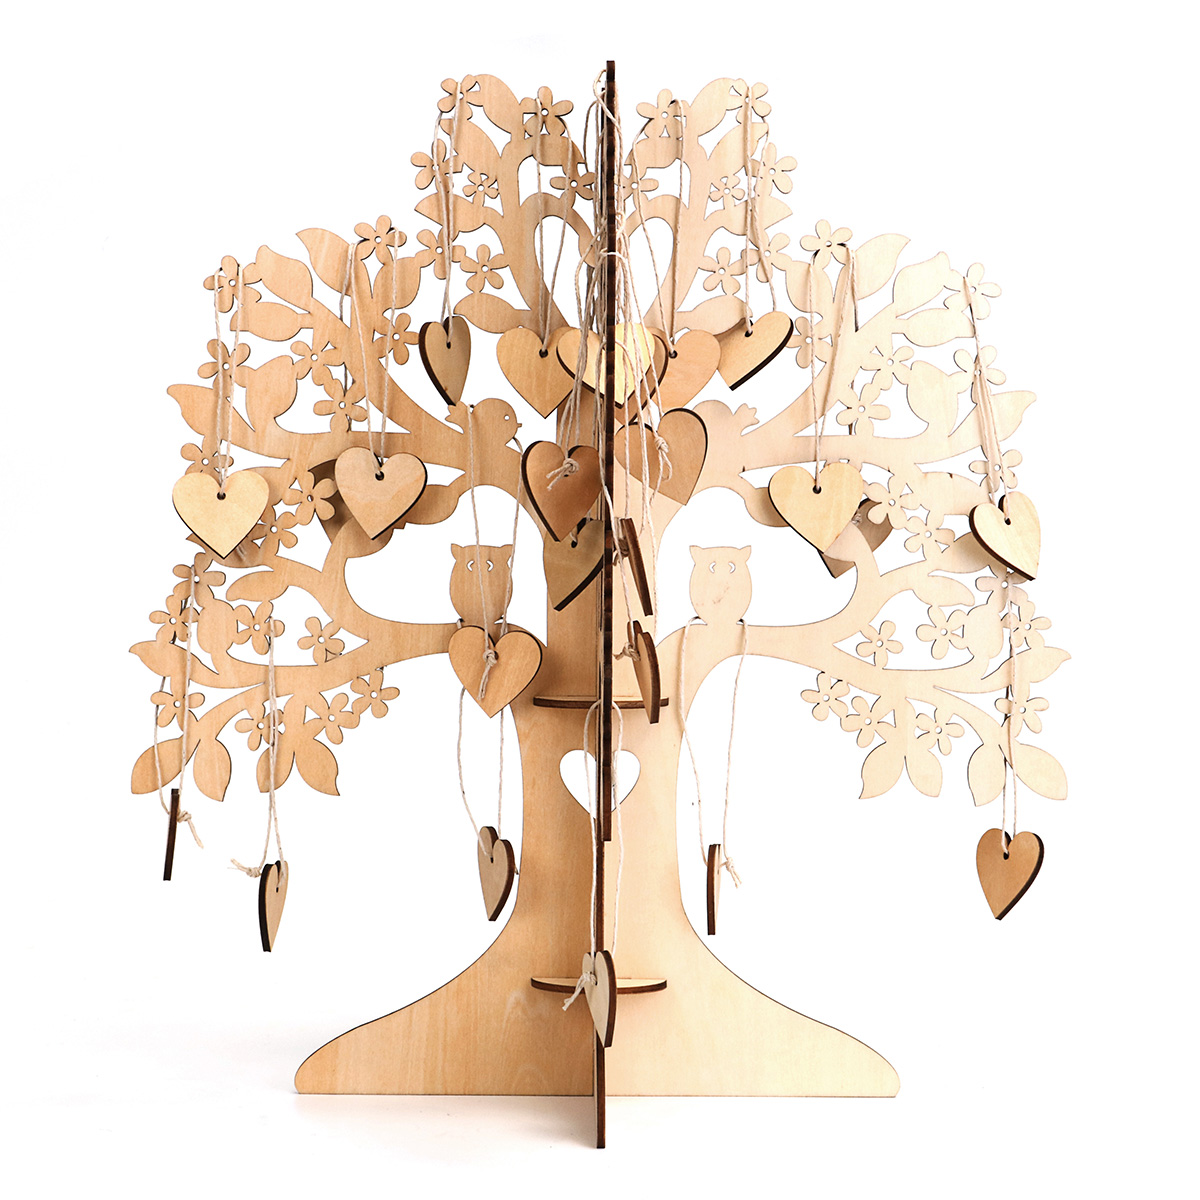 DIY-Wedding-Book-Tree-Marriage-Guest-Book-Wooden-Tree-Hearts-Pendant-Drop-Ornaments-Decorations-1468183-6